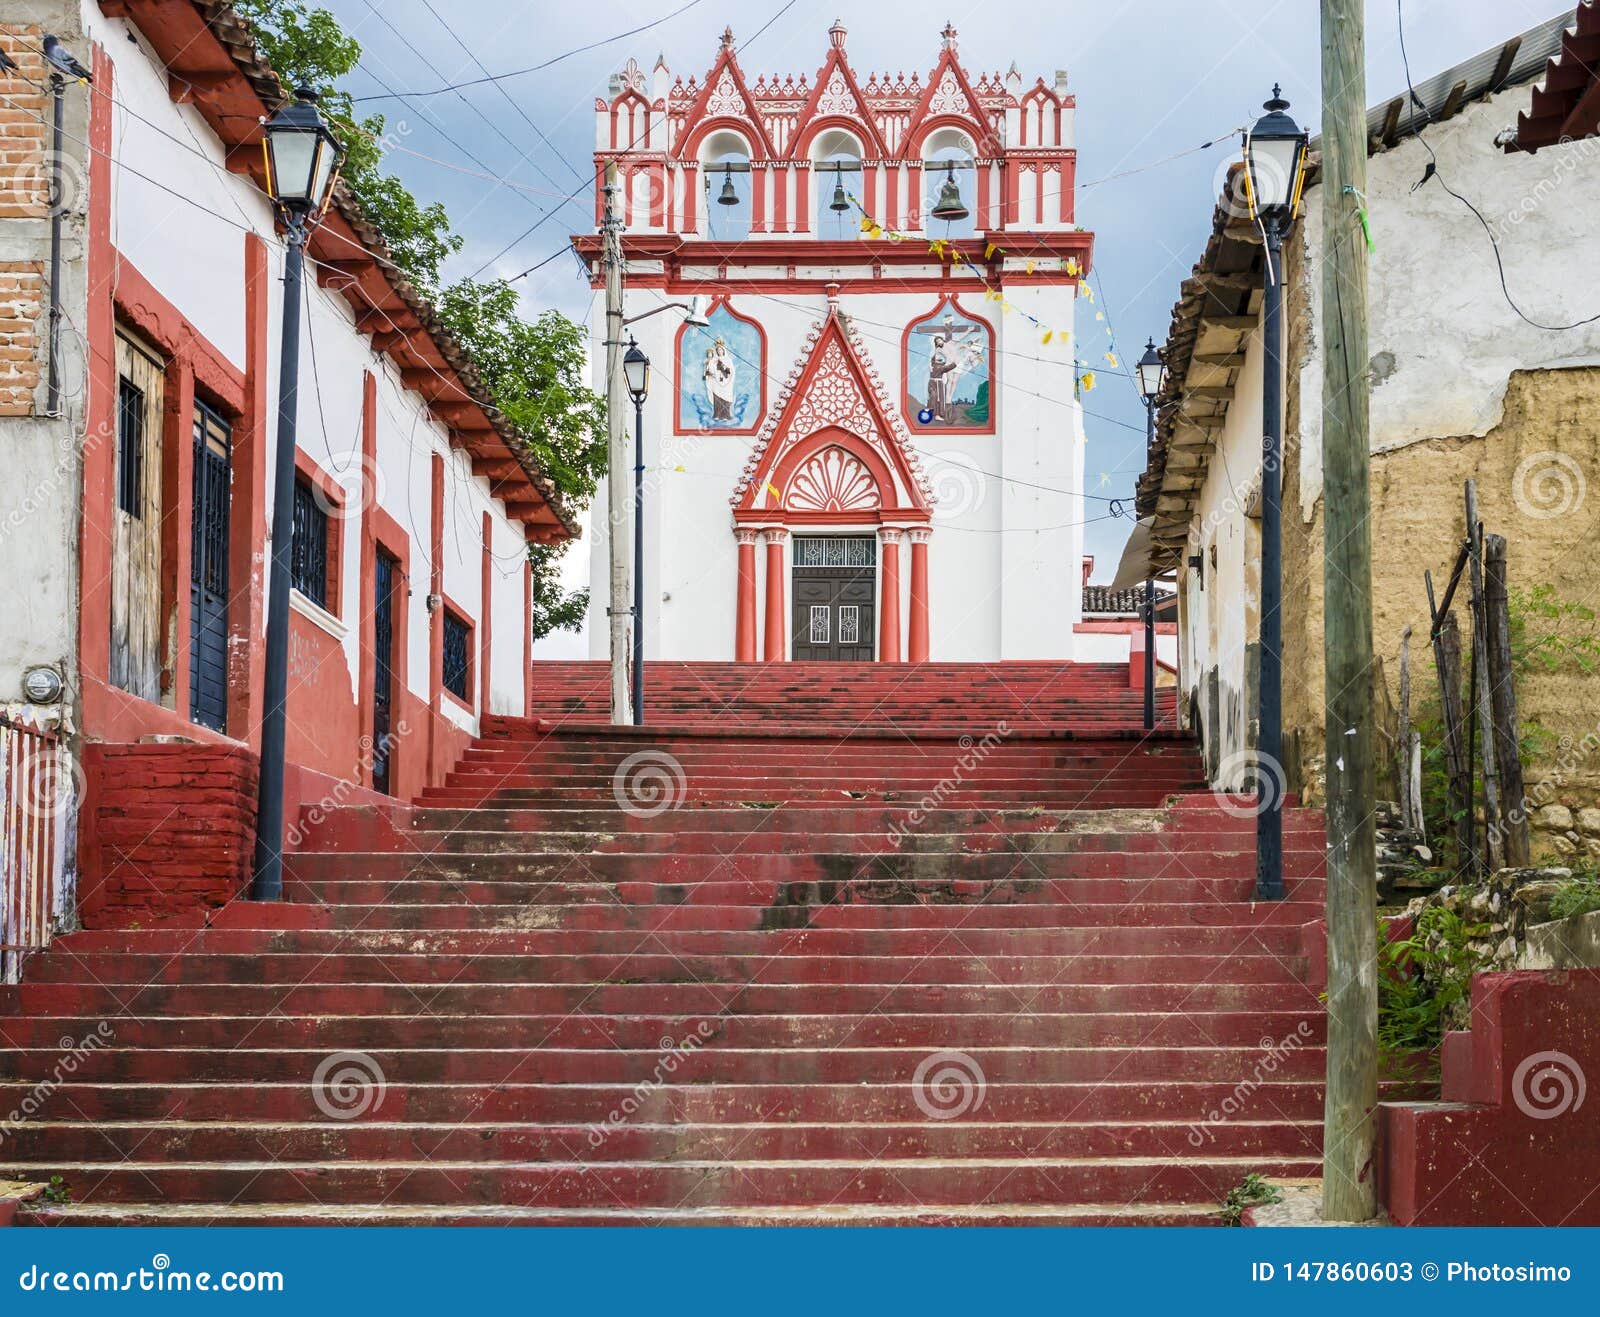 calvary temple, colonial church in chiapa de corzo, chiapas, mexico